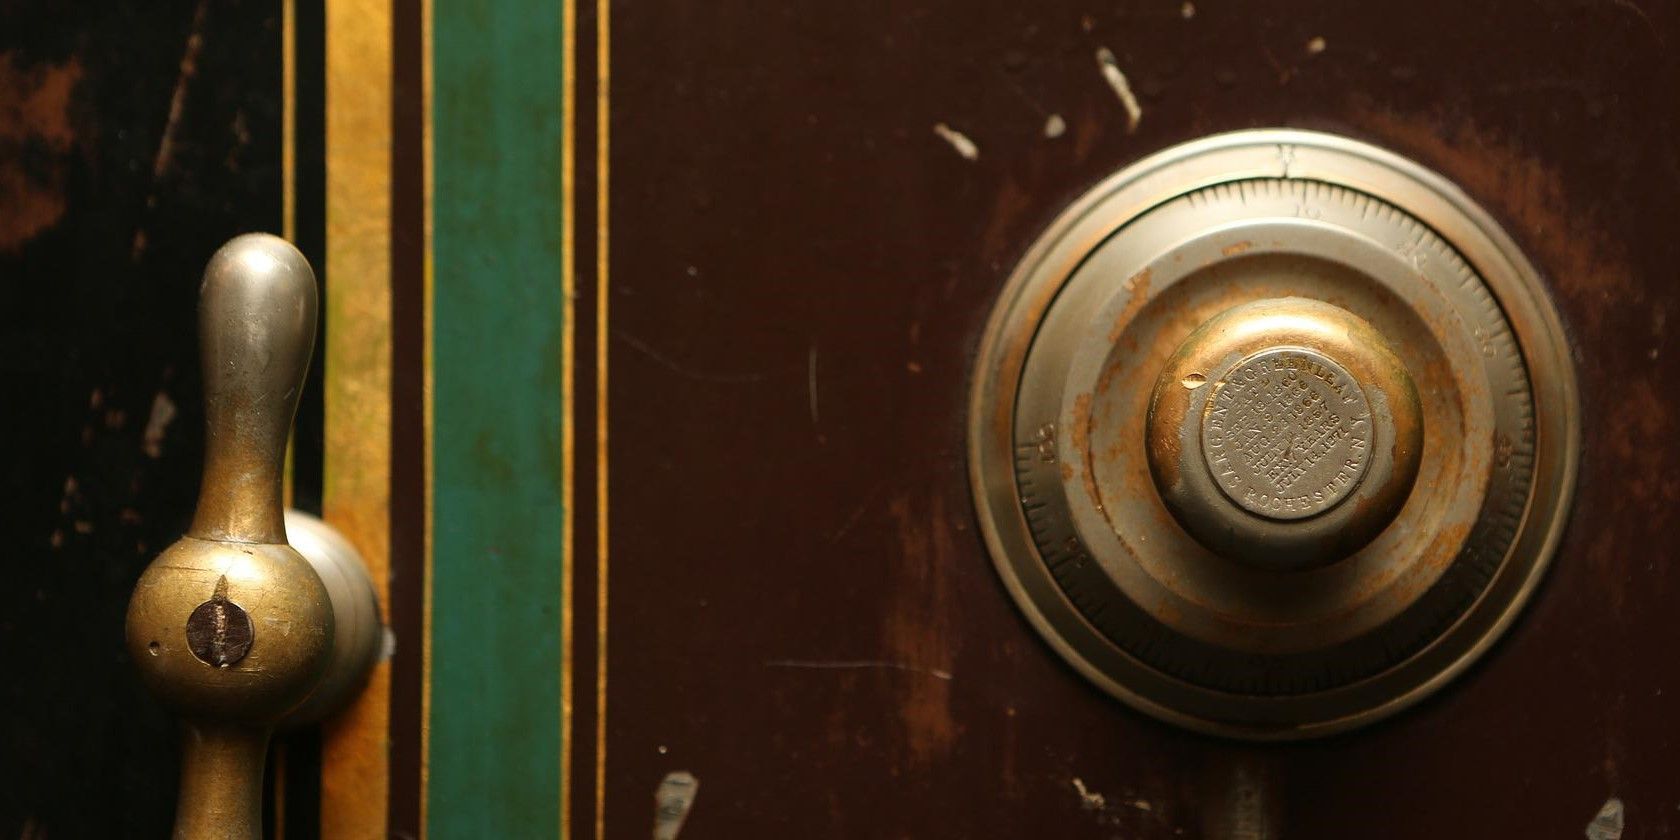 Old style doorbell